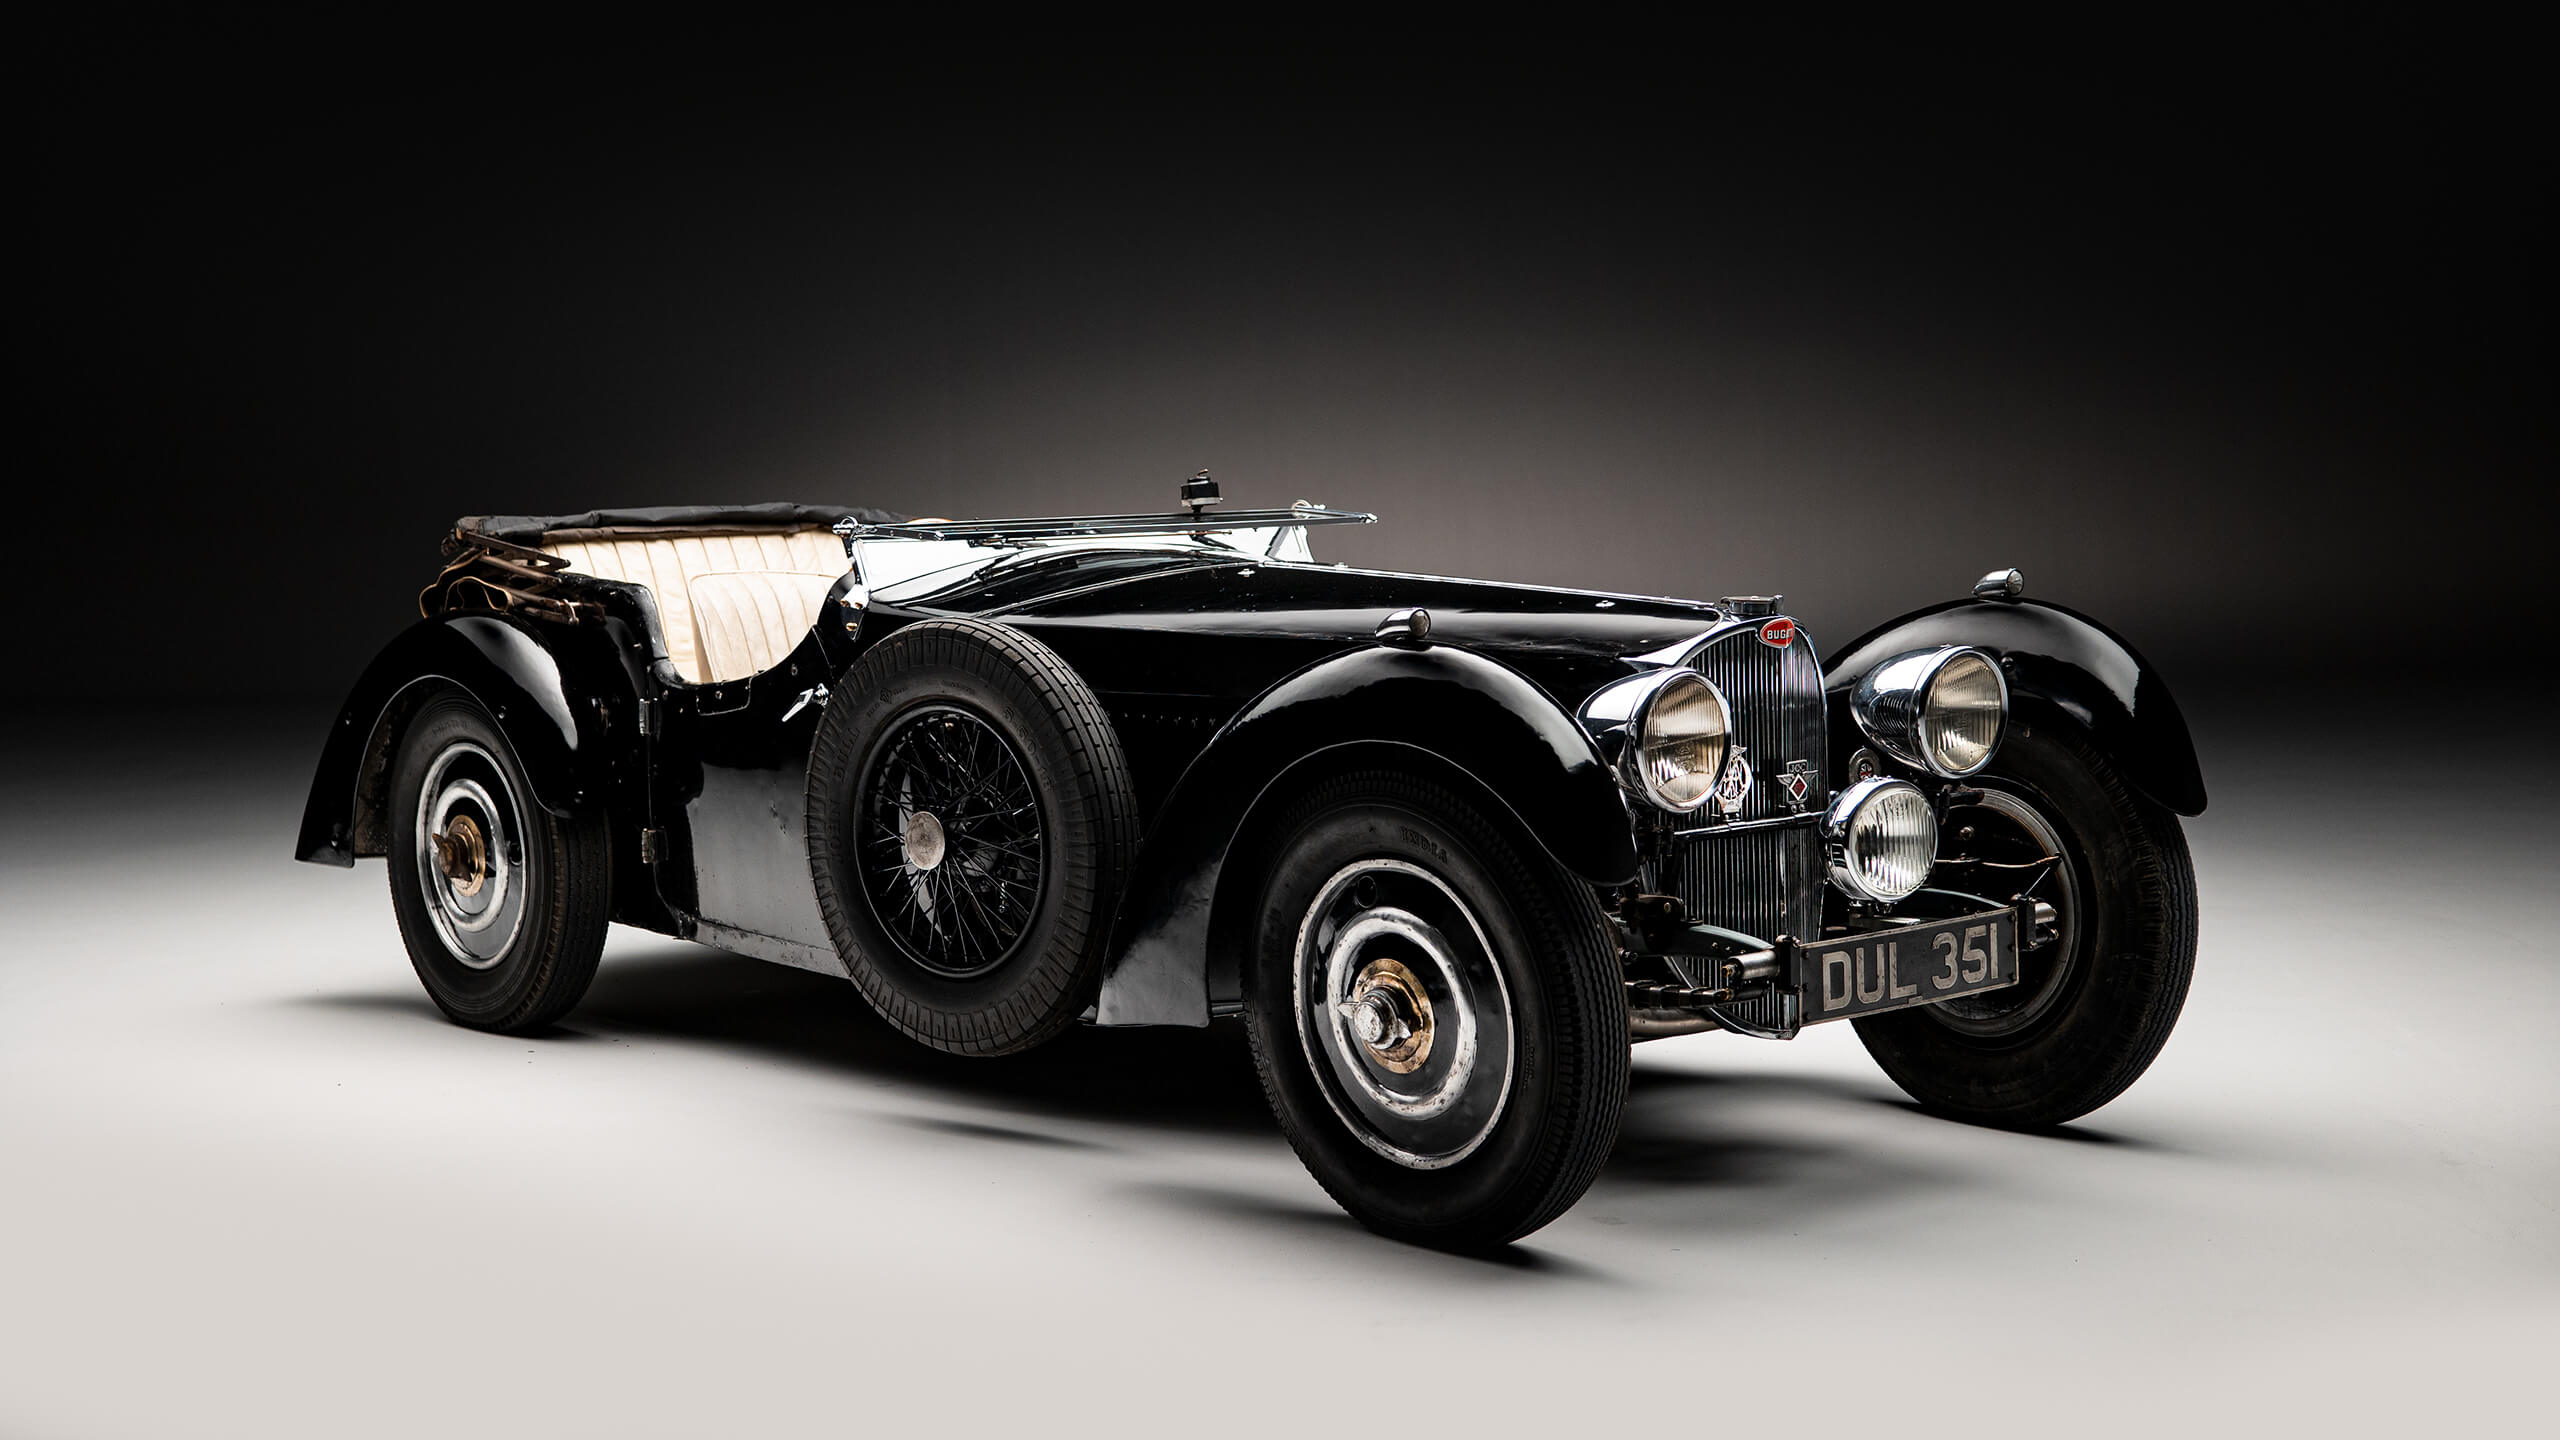 1937 Bugatti Type 57S sells for £4m at Bonhams’ latest Bond St sale